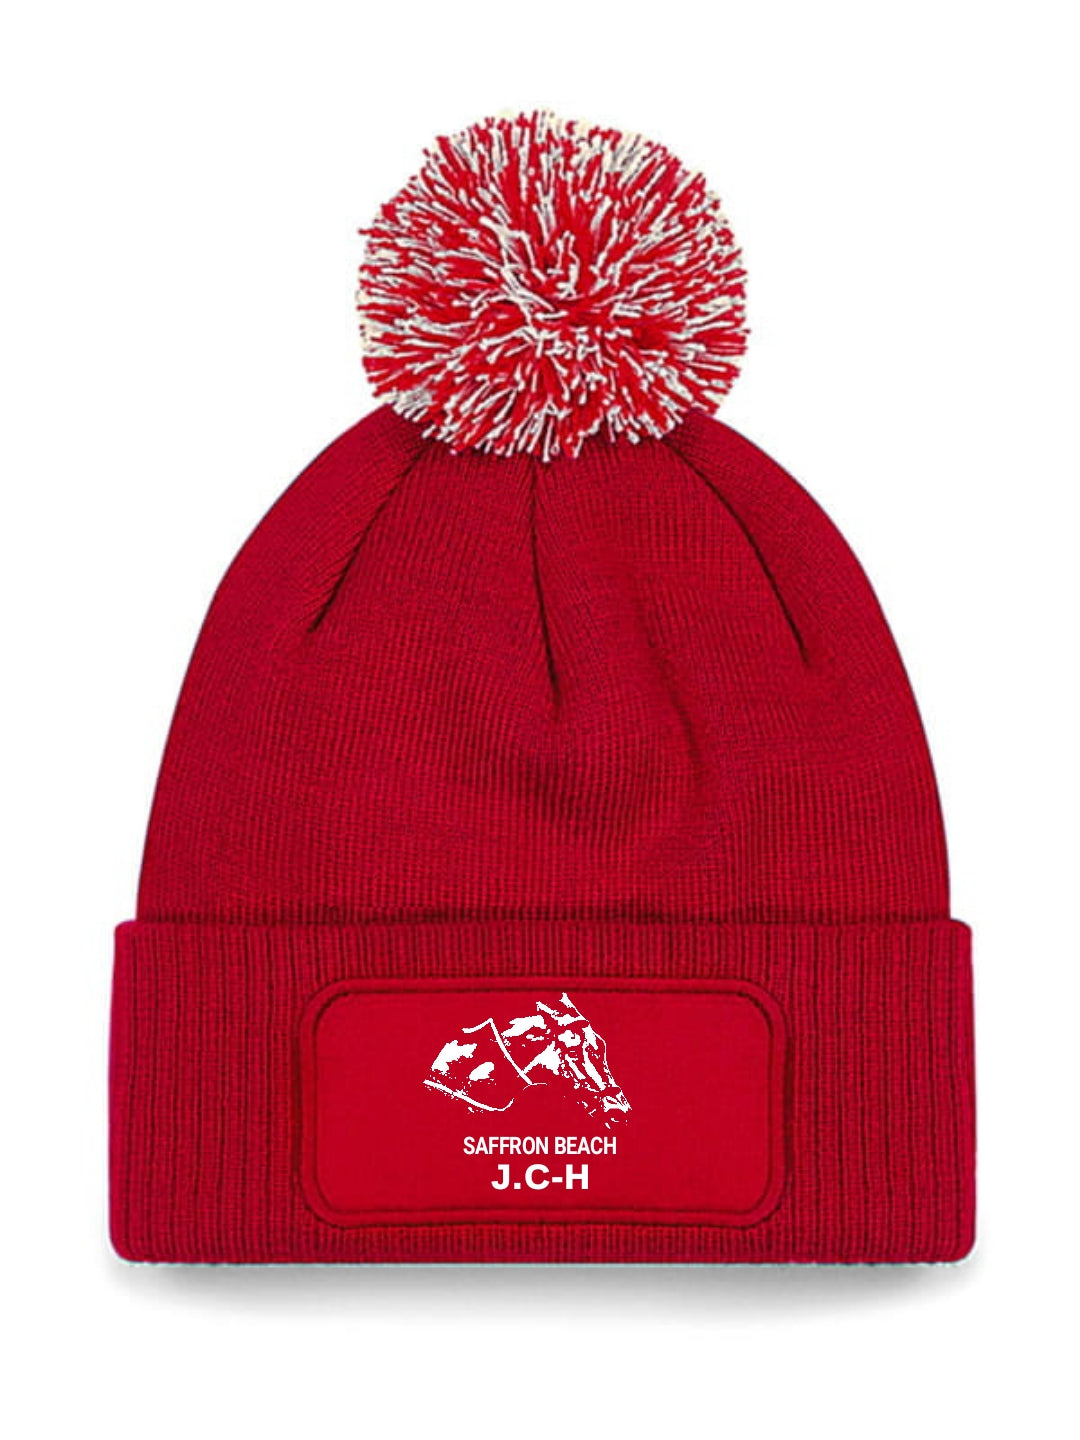 J.C-H Custom Horse Racing Hats